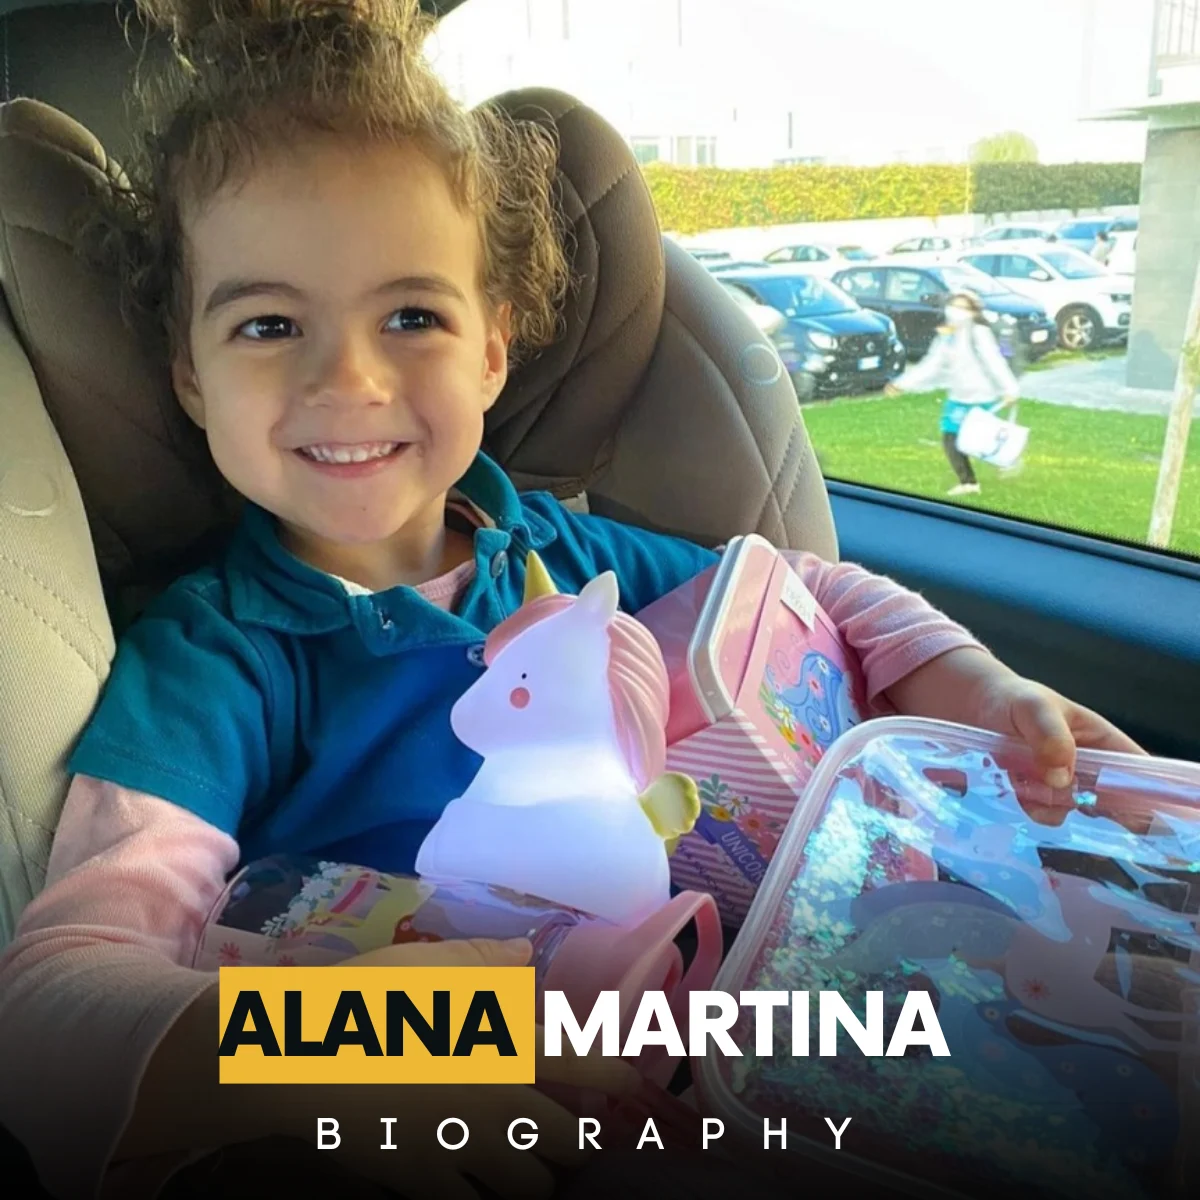 Alana Martina Dos Santos Aveiro Biography